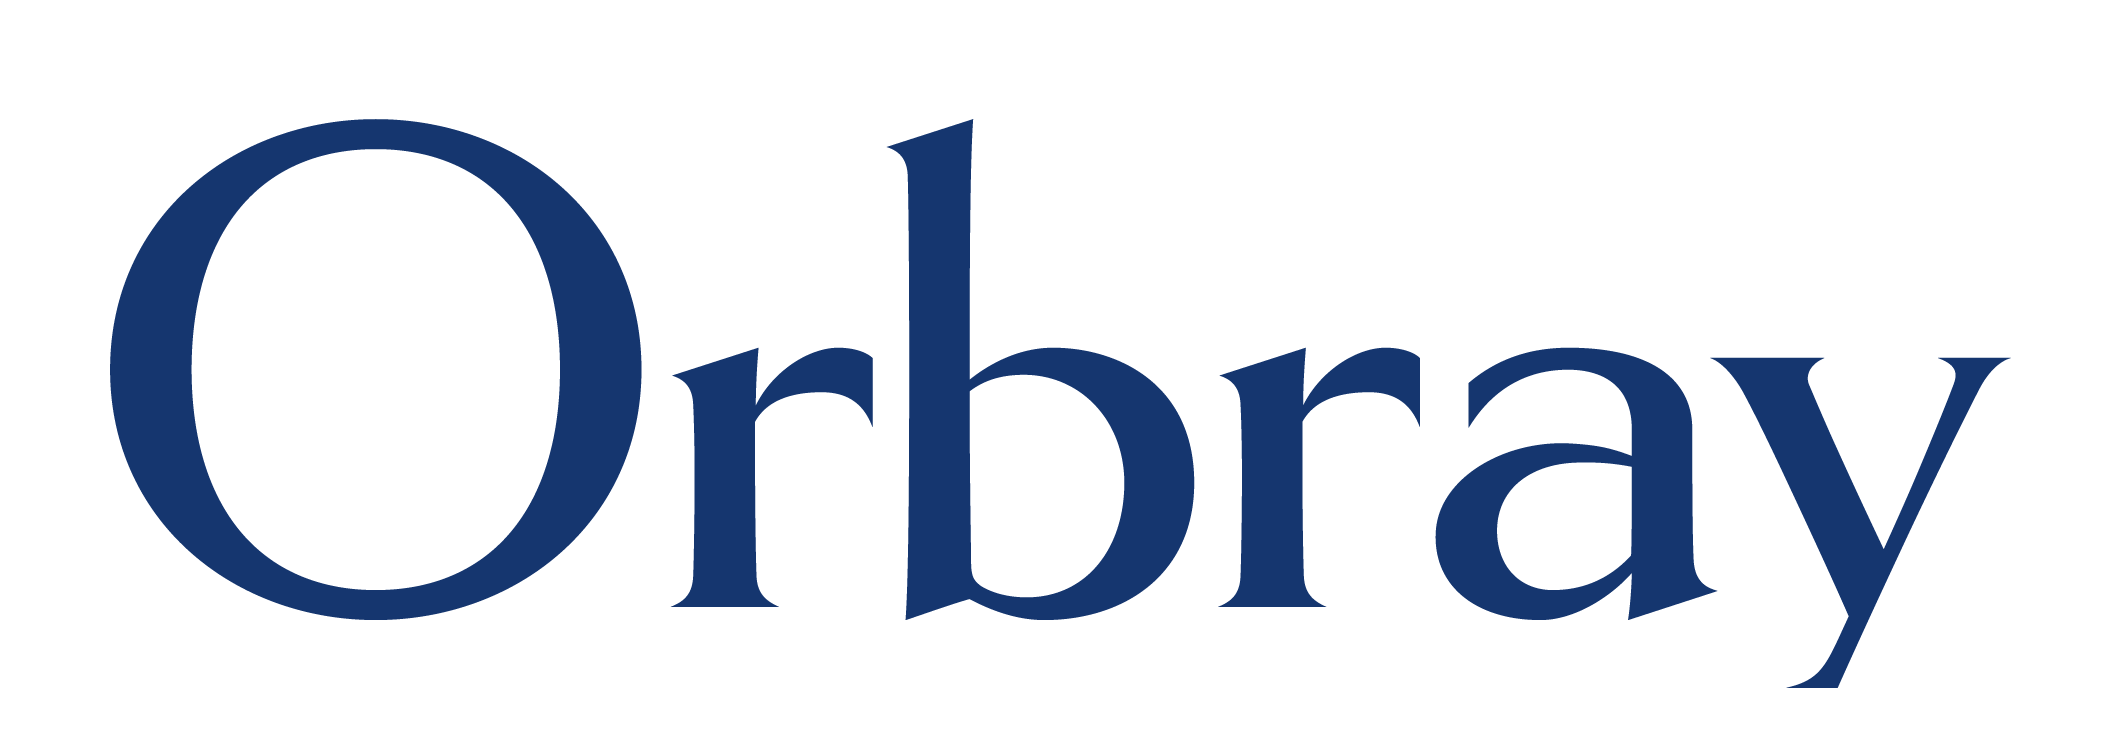 Orbray Logo